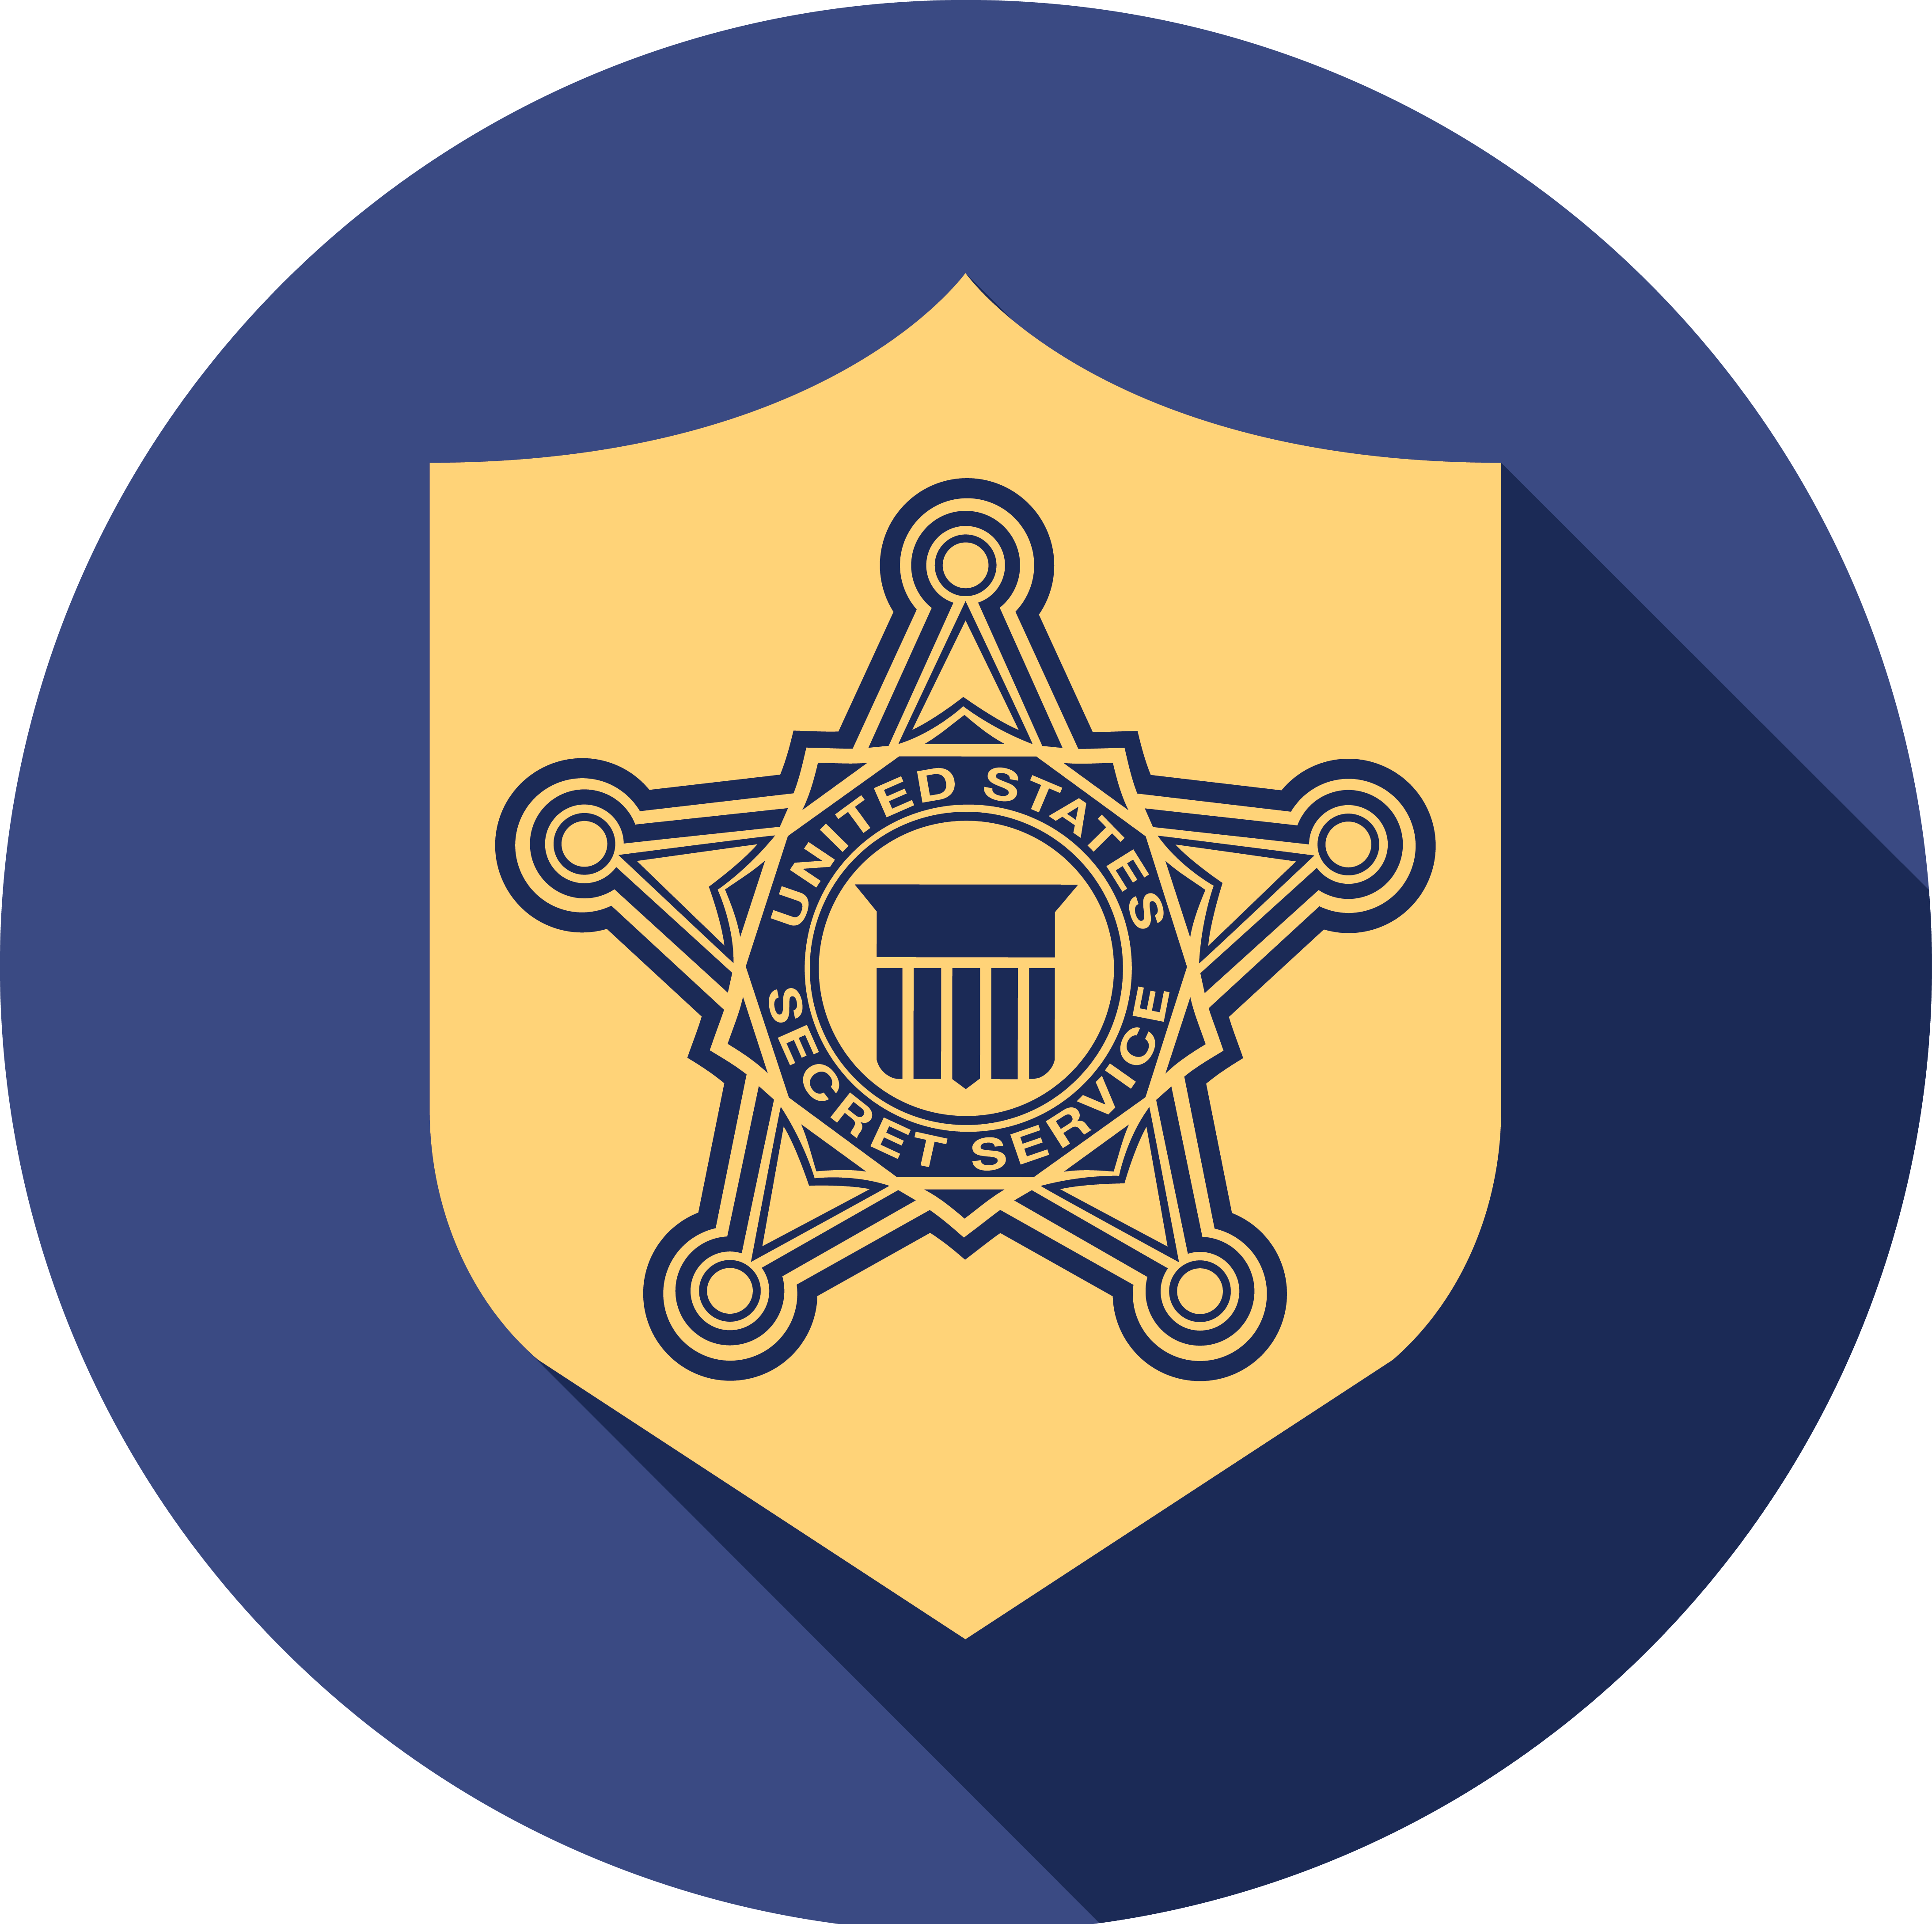 Graphic of United States Secret Service shield.